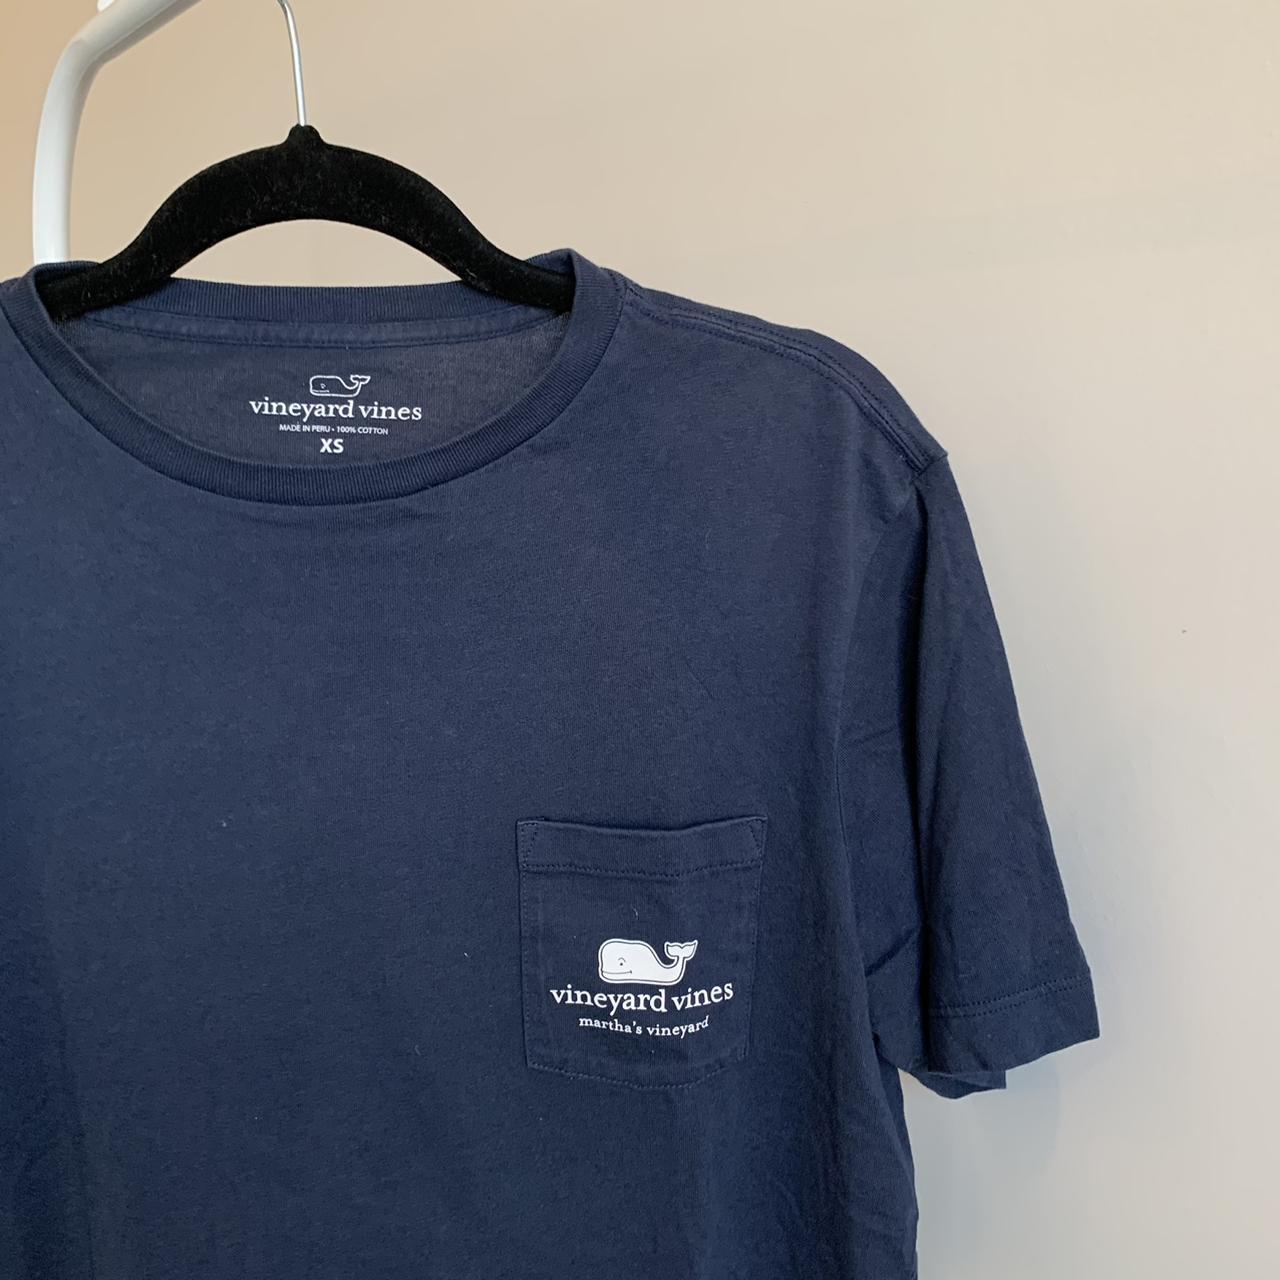 Vineyard Vines navy blue Martha’s Vineyard T-shirt.